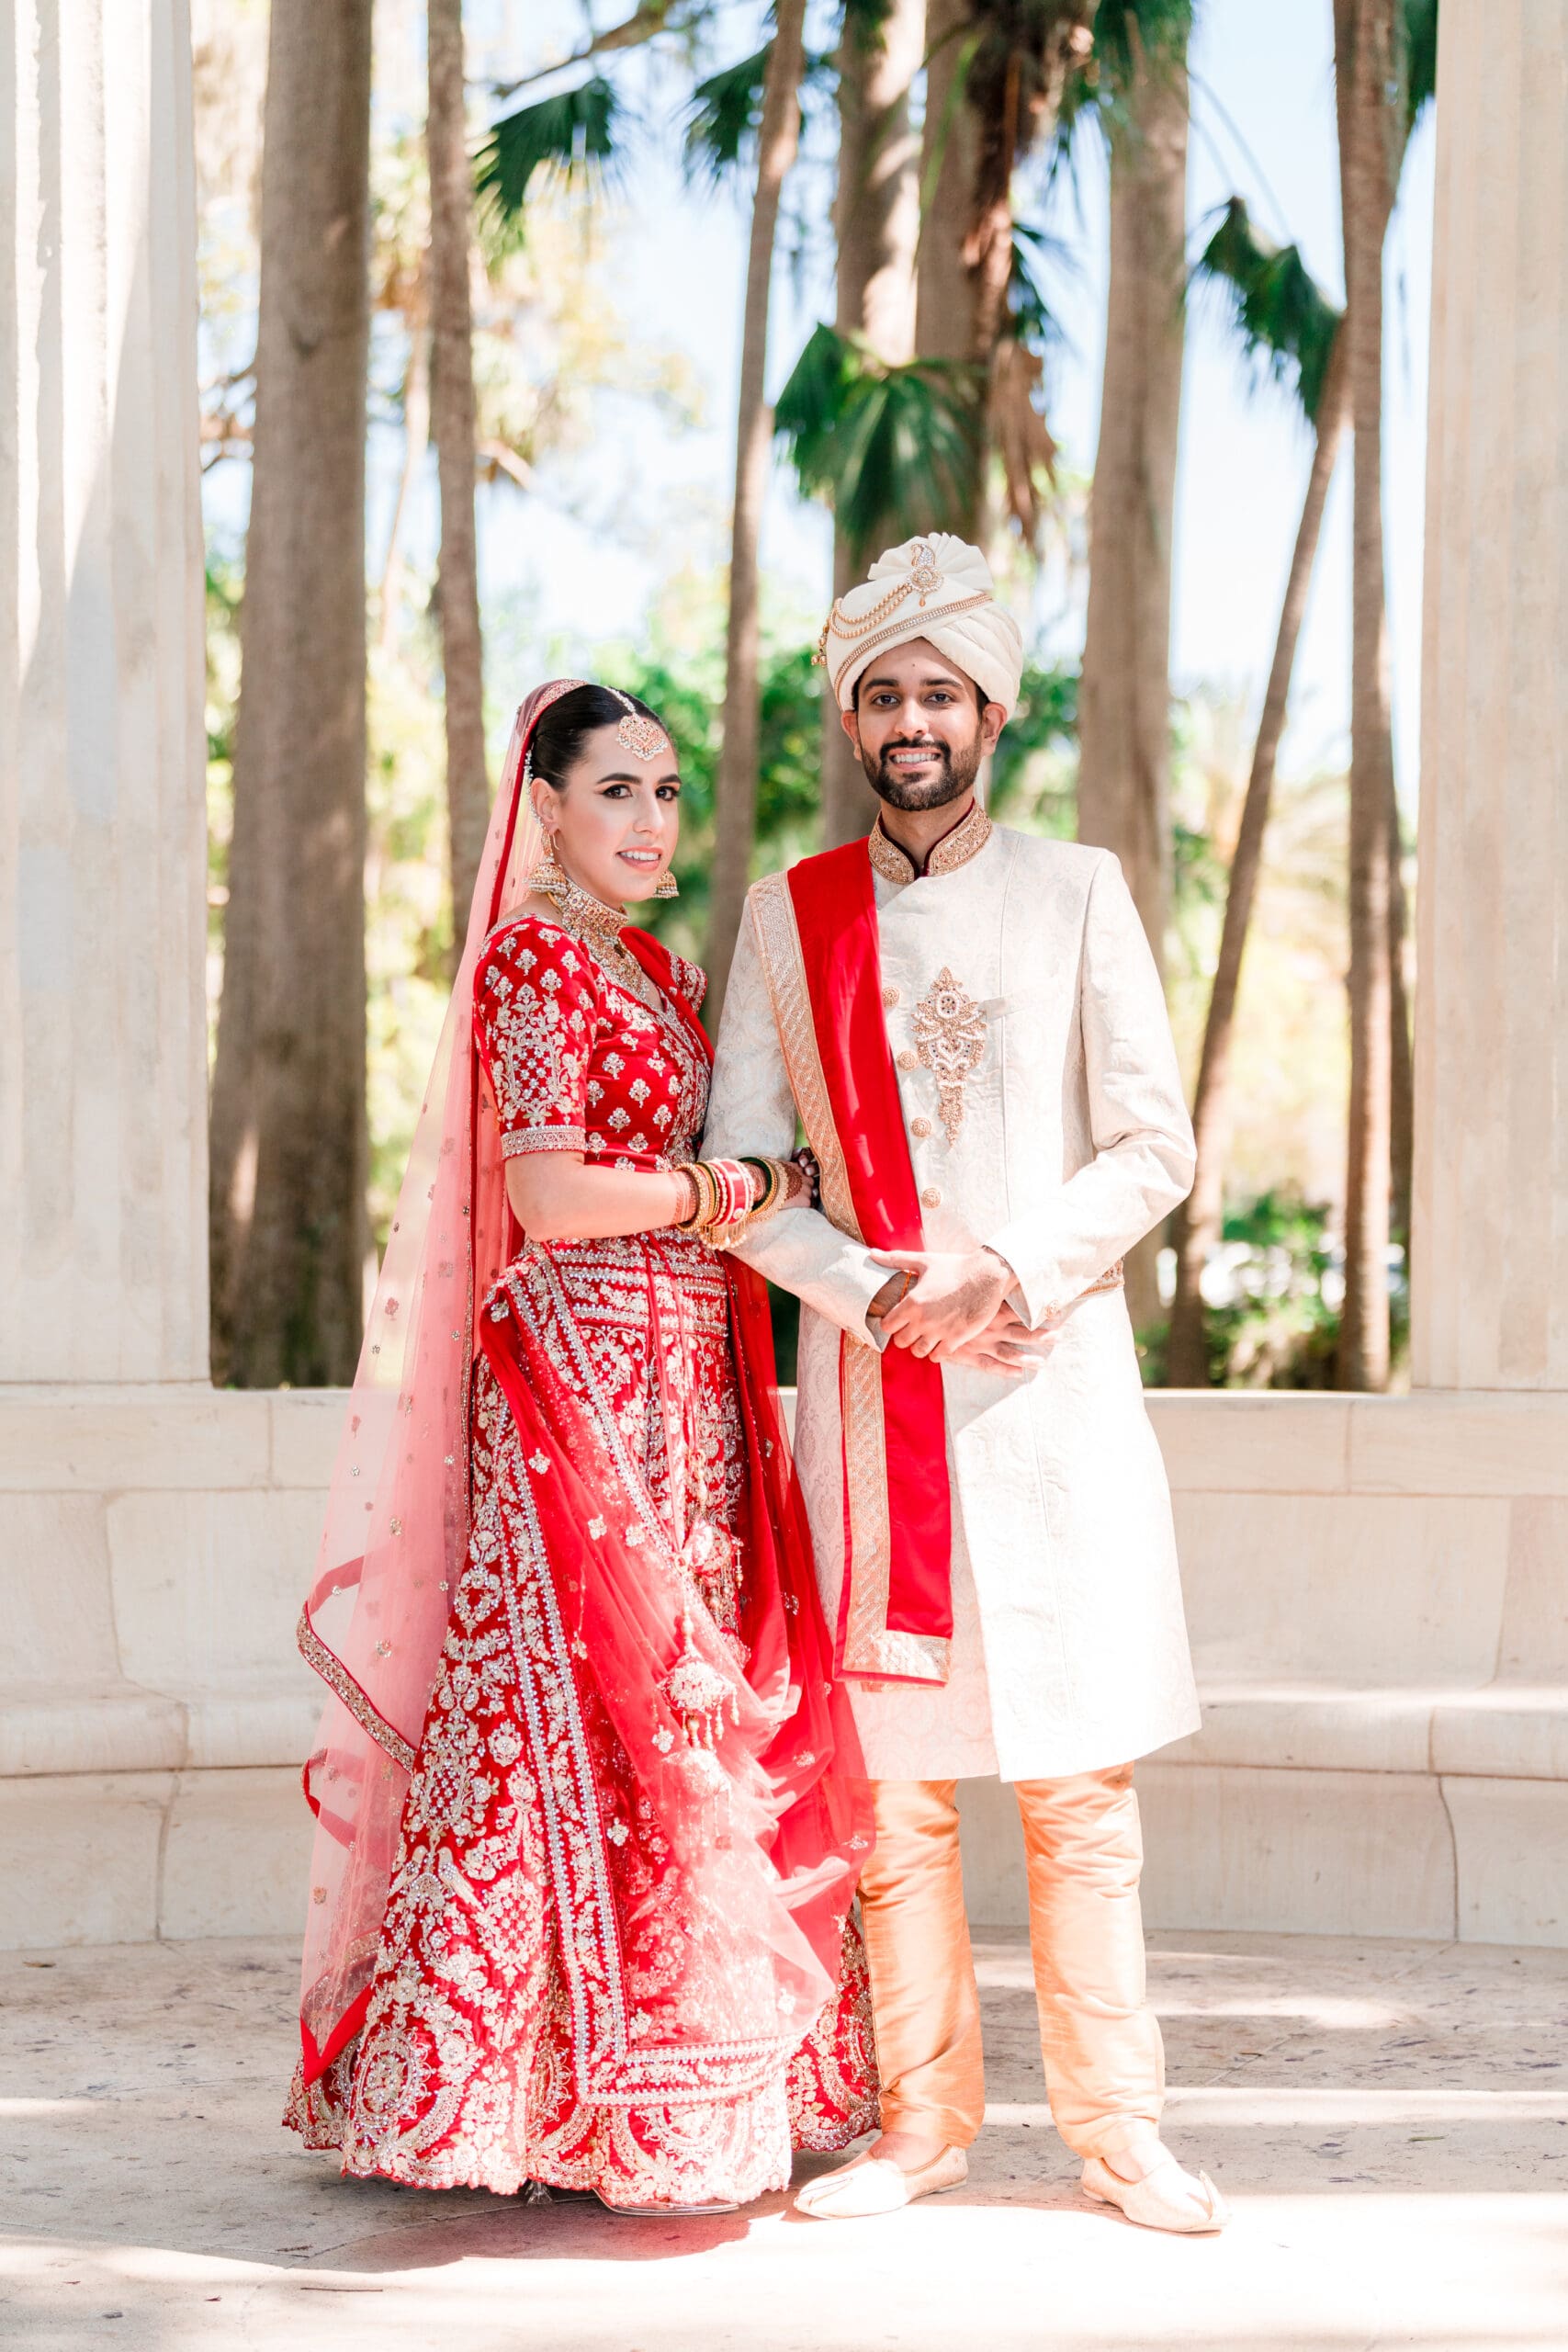 Sabrina & Rahul – Kraft Azalea Gardens – Holy Trinity Reception Center Wedding – Videography & Photography